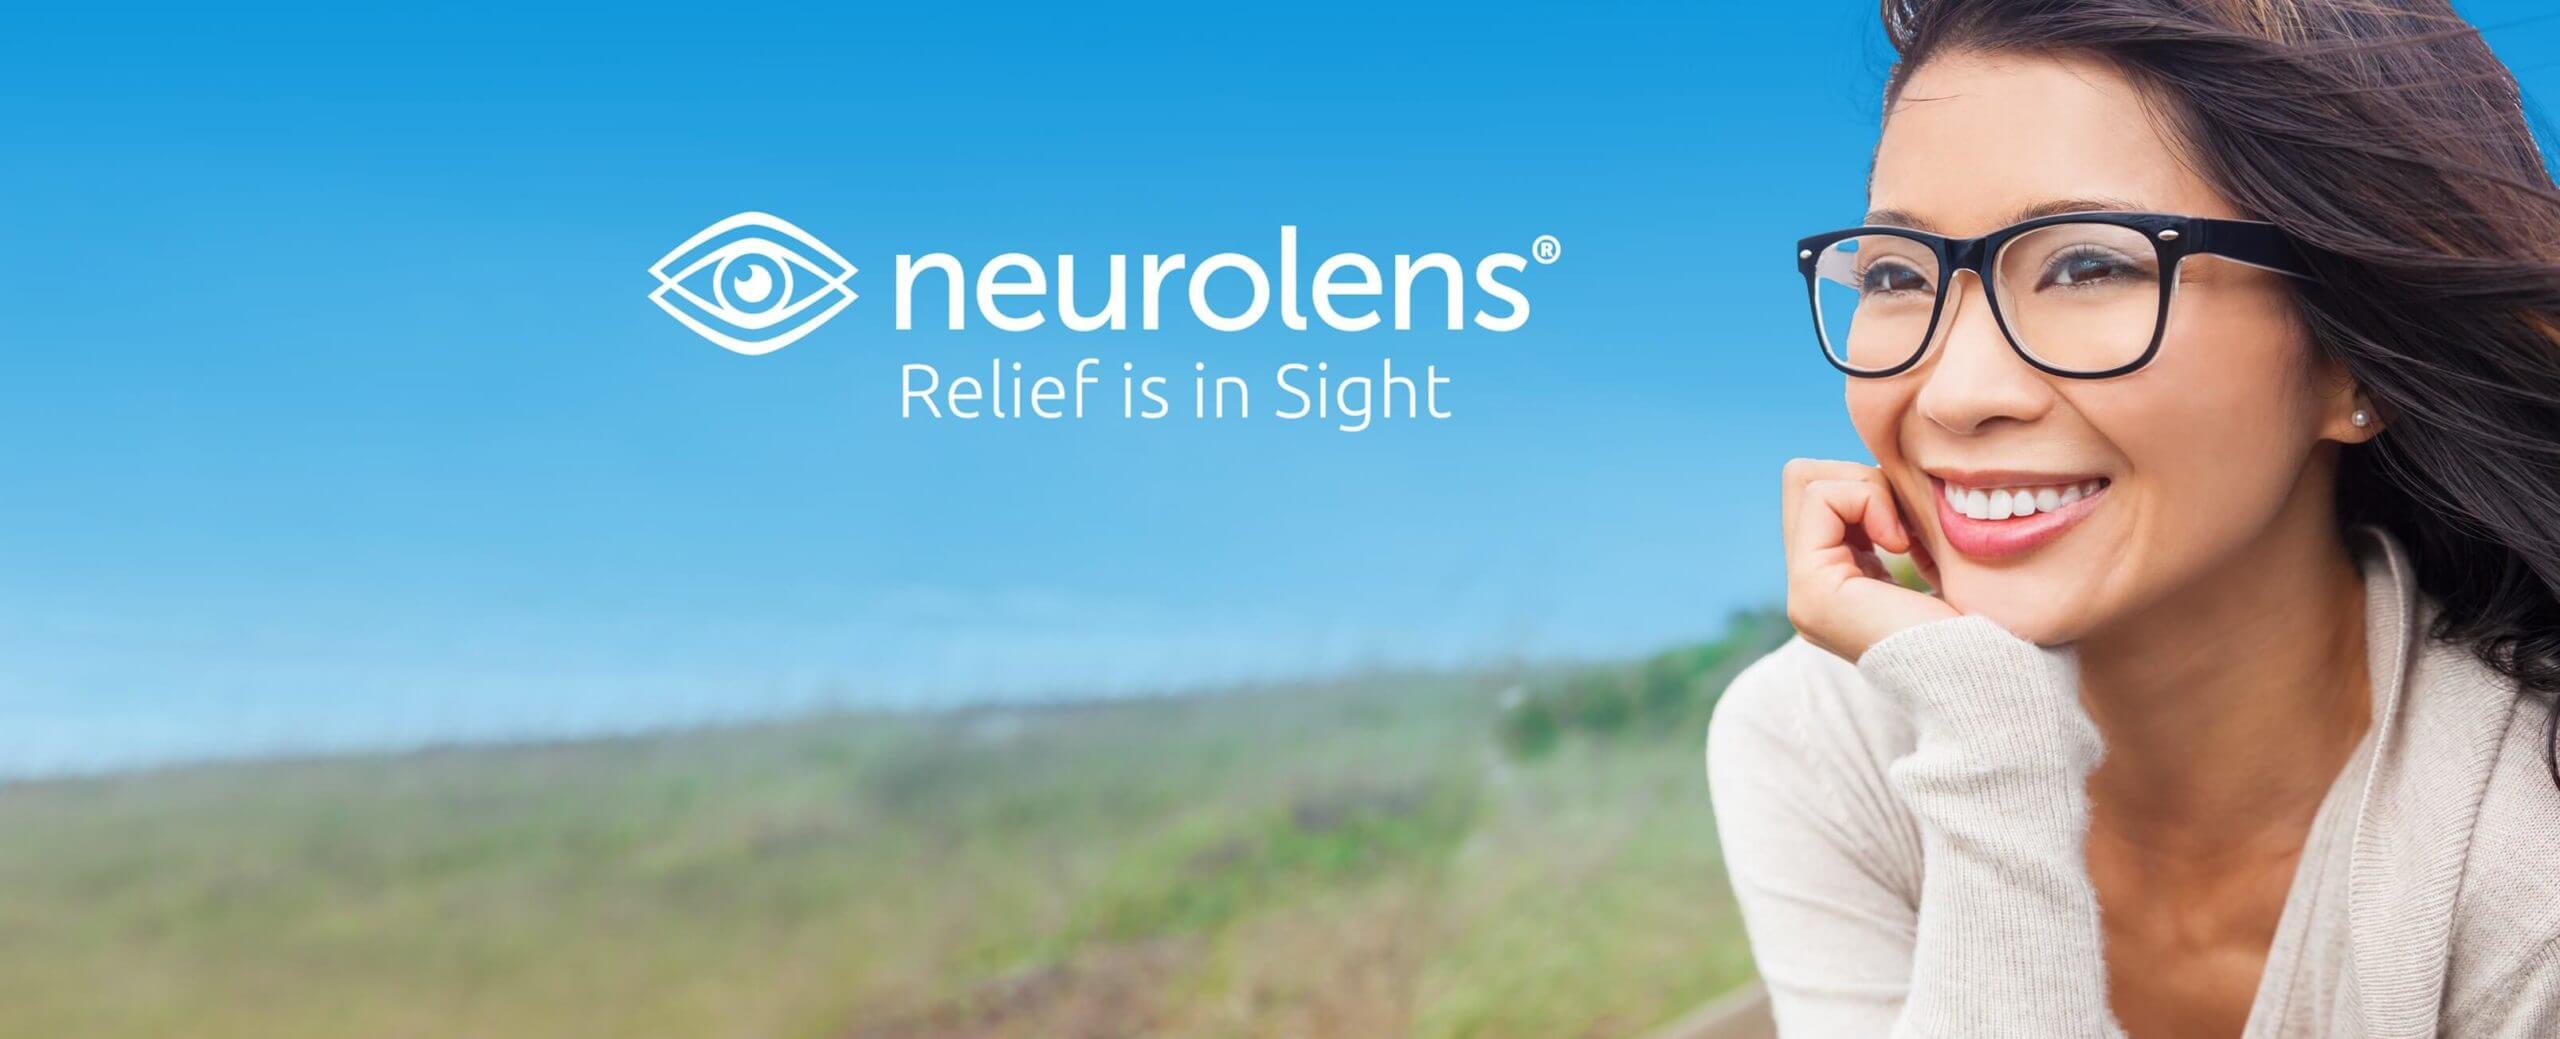 neurolens banner image scaled.jpg